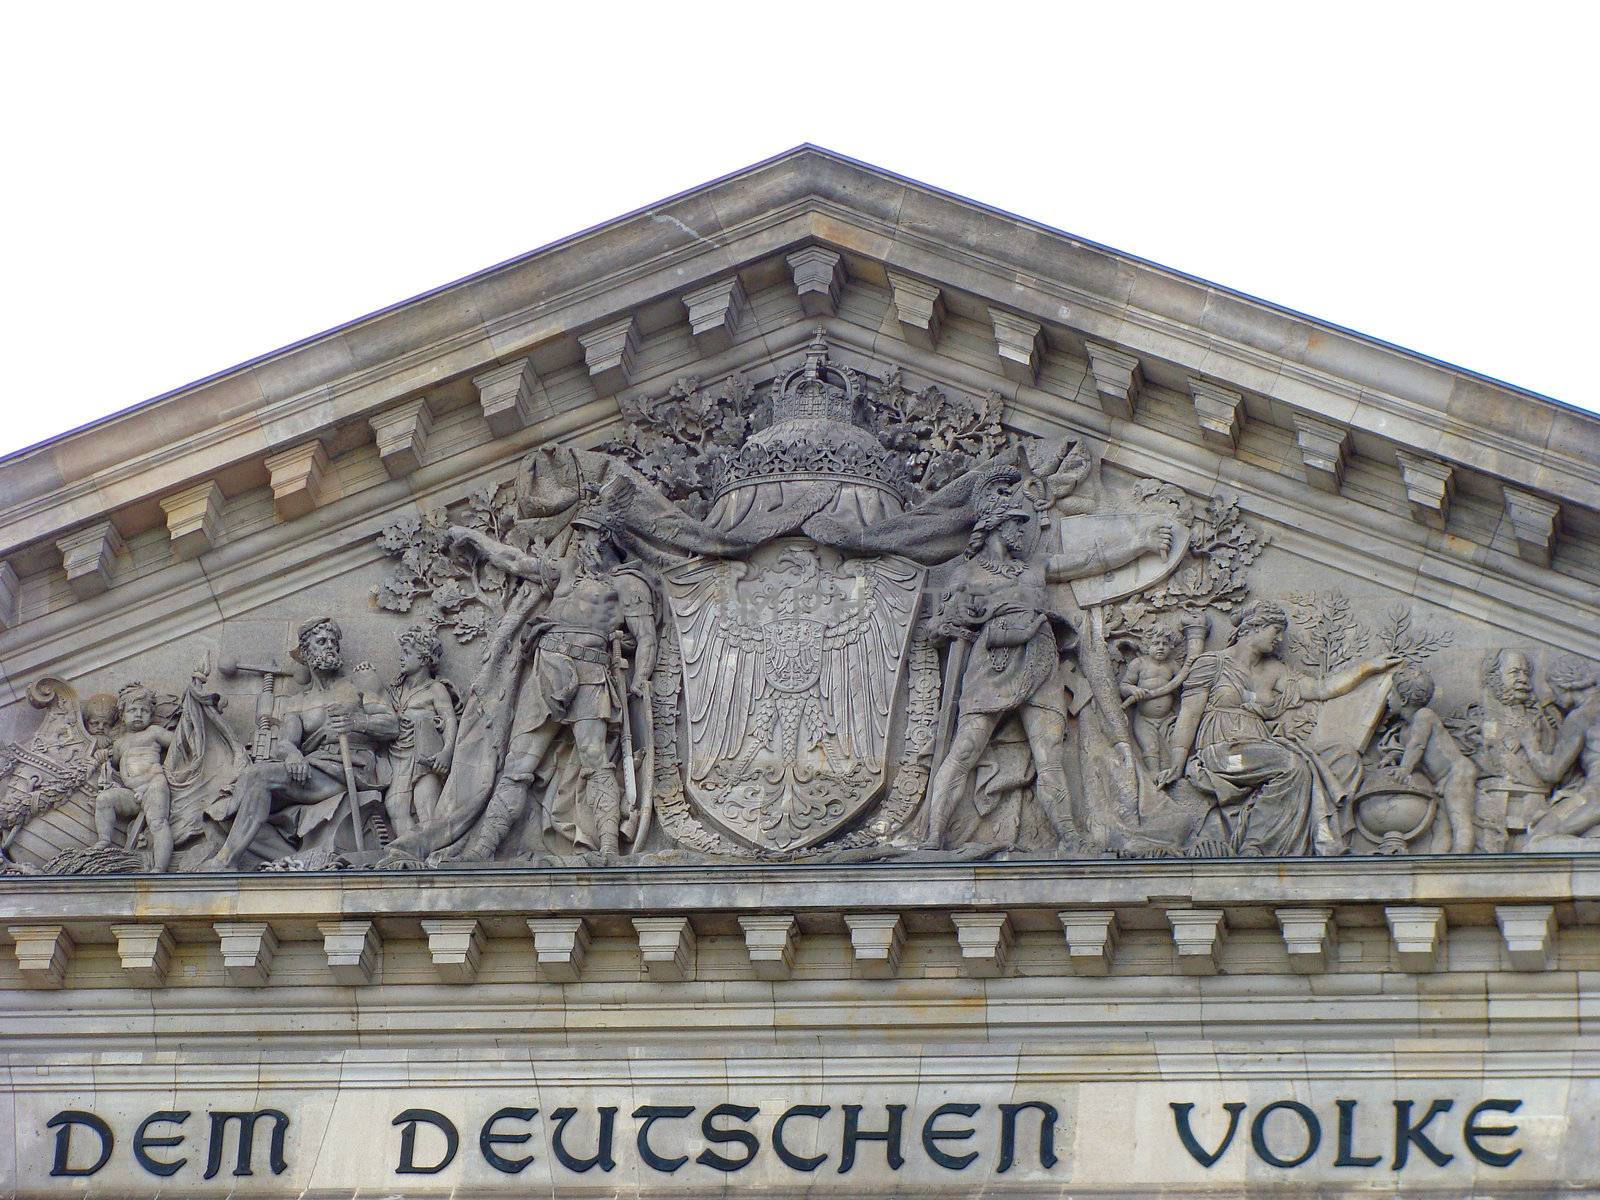 The dedication "DEM DEUTSCHEN VOLKE", meaning "To the German people"